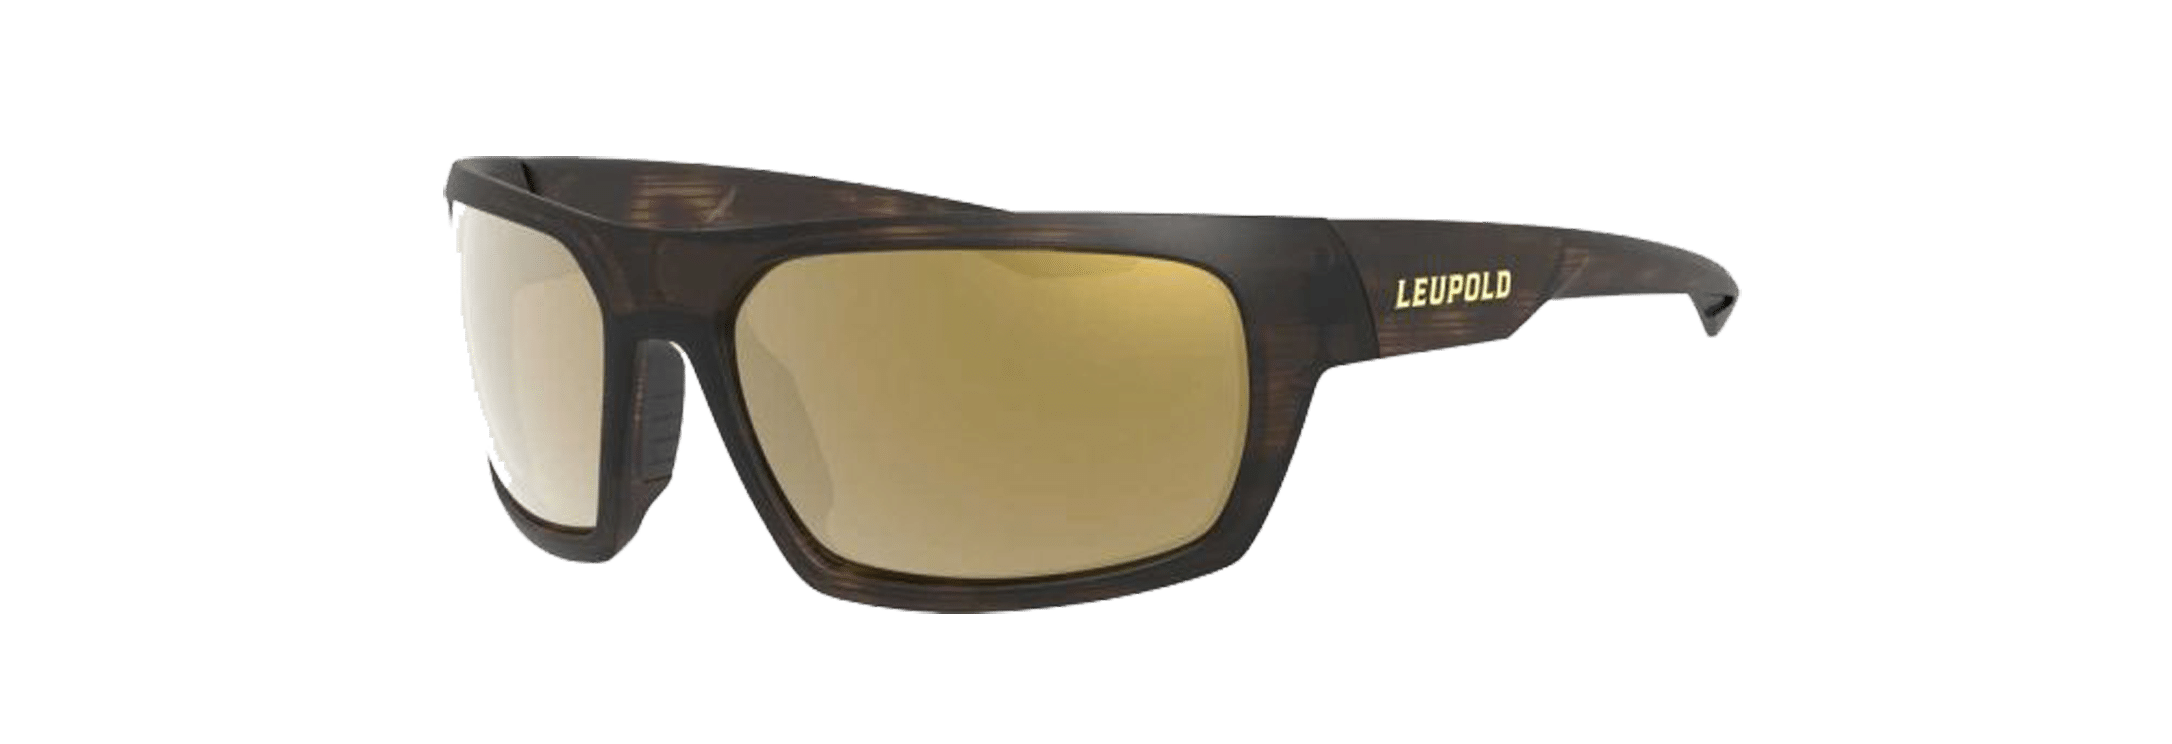 Leupold Performance Sunglasses